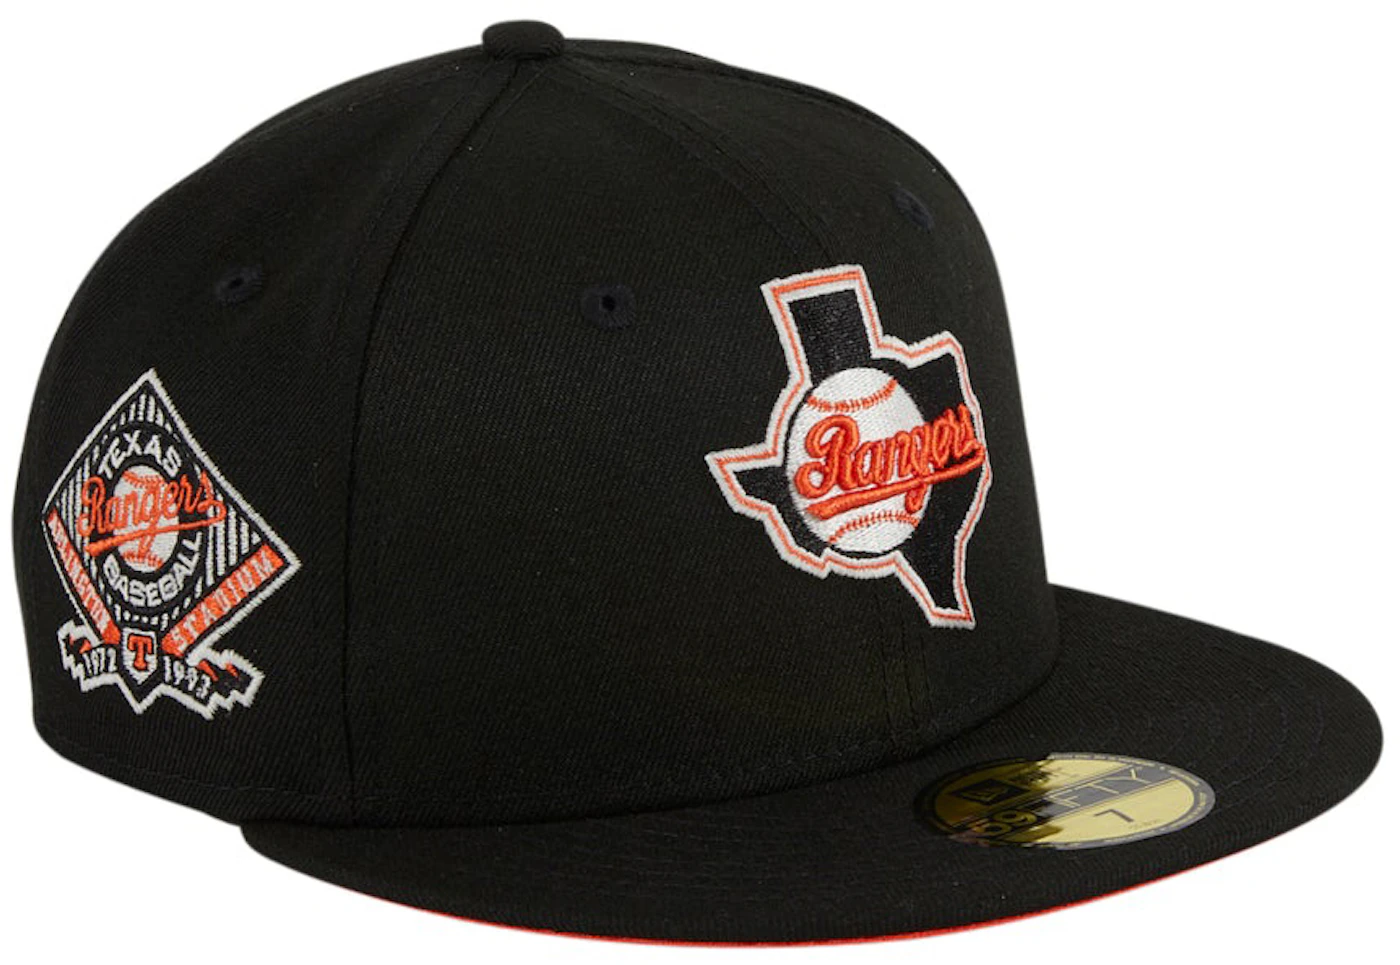 Colorado Rockies Fitted New Era 59Fifty Alternate Silver Logo Black Cap Hat